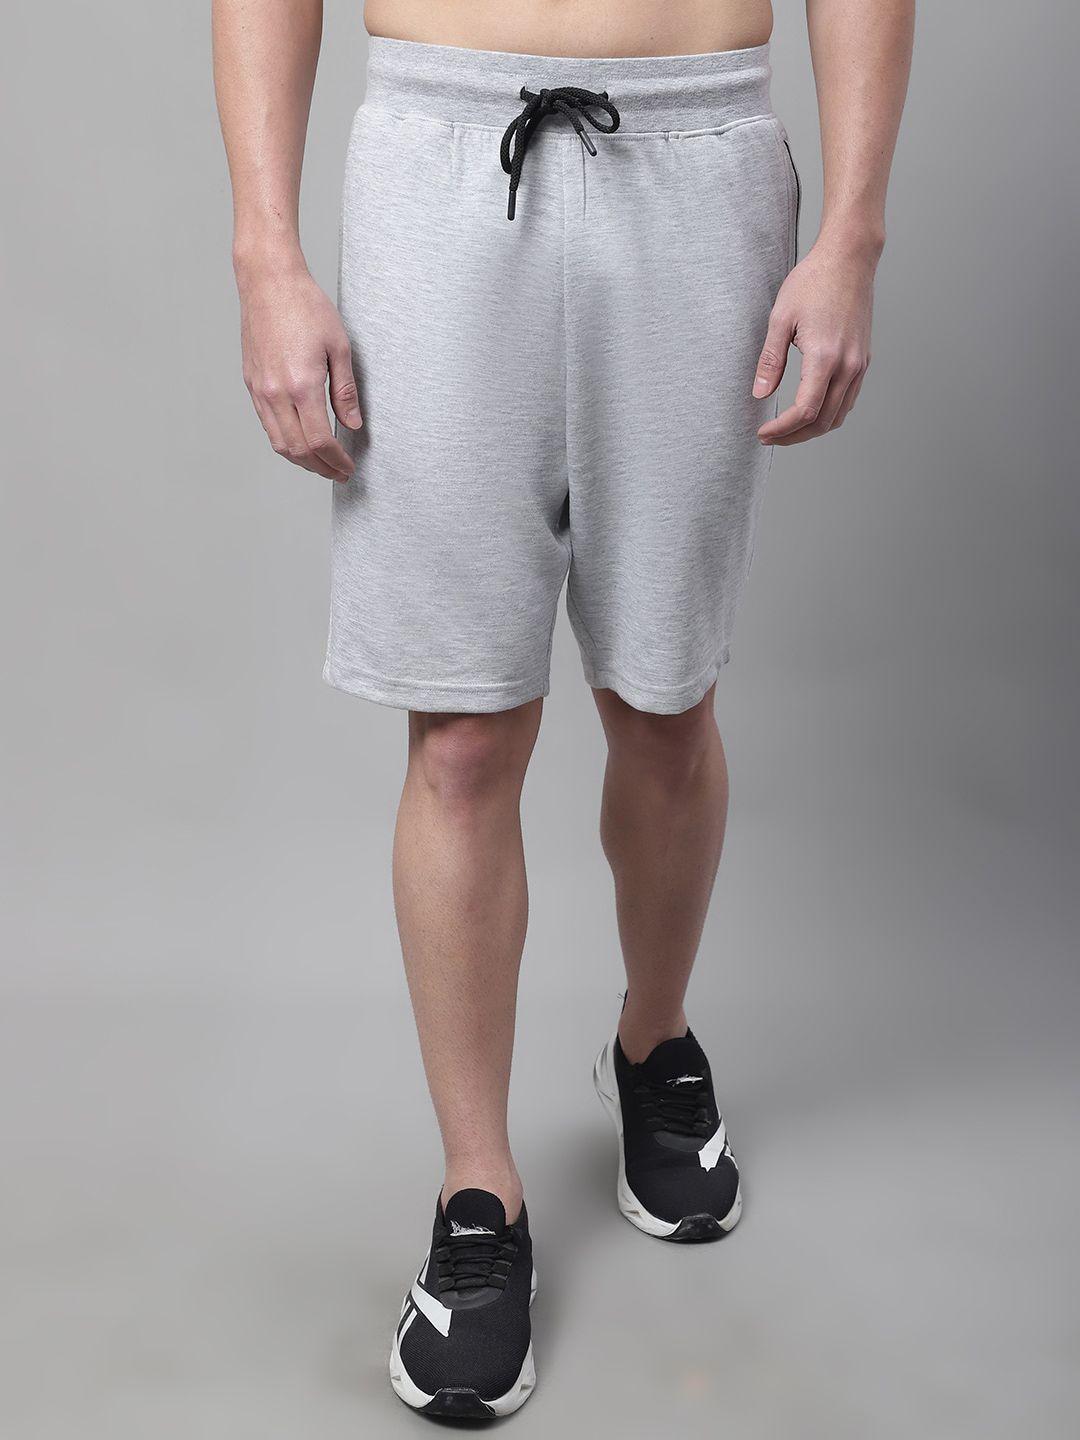 cantabil-men-solid-sports-shorts